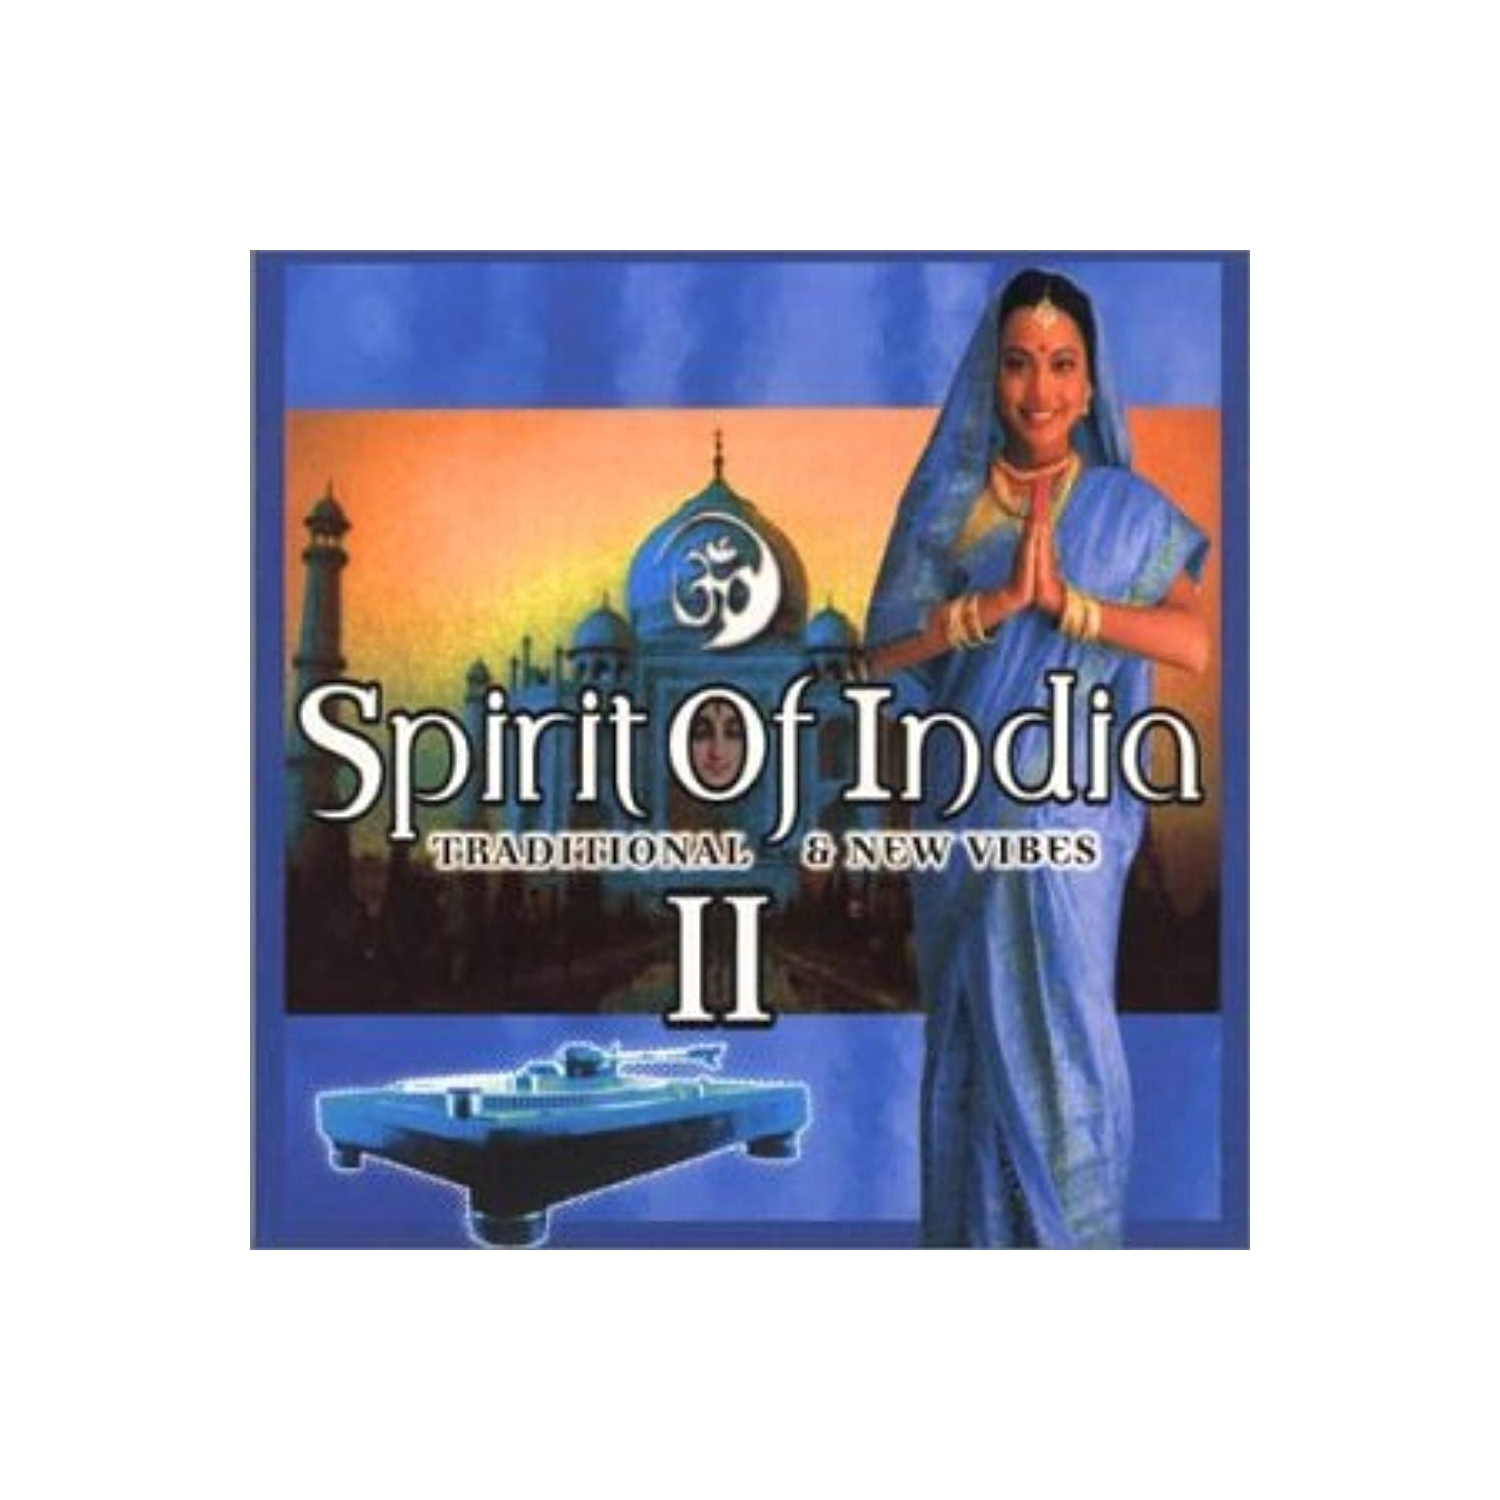 Spirit of India V.2 [Audio CD] Various Artists